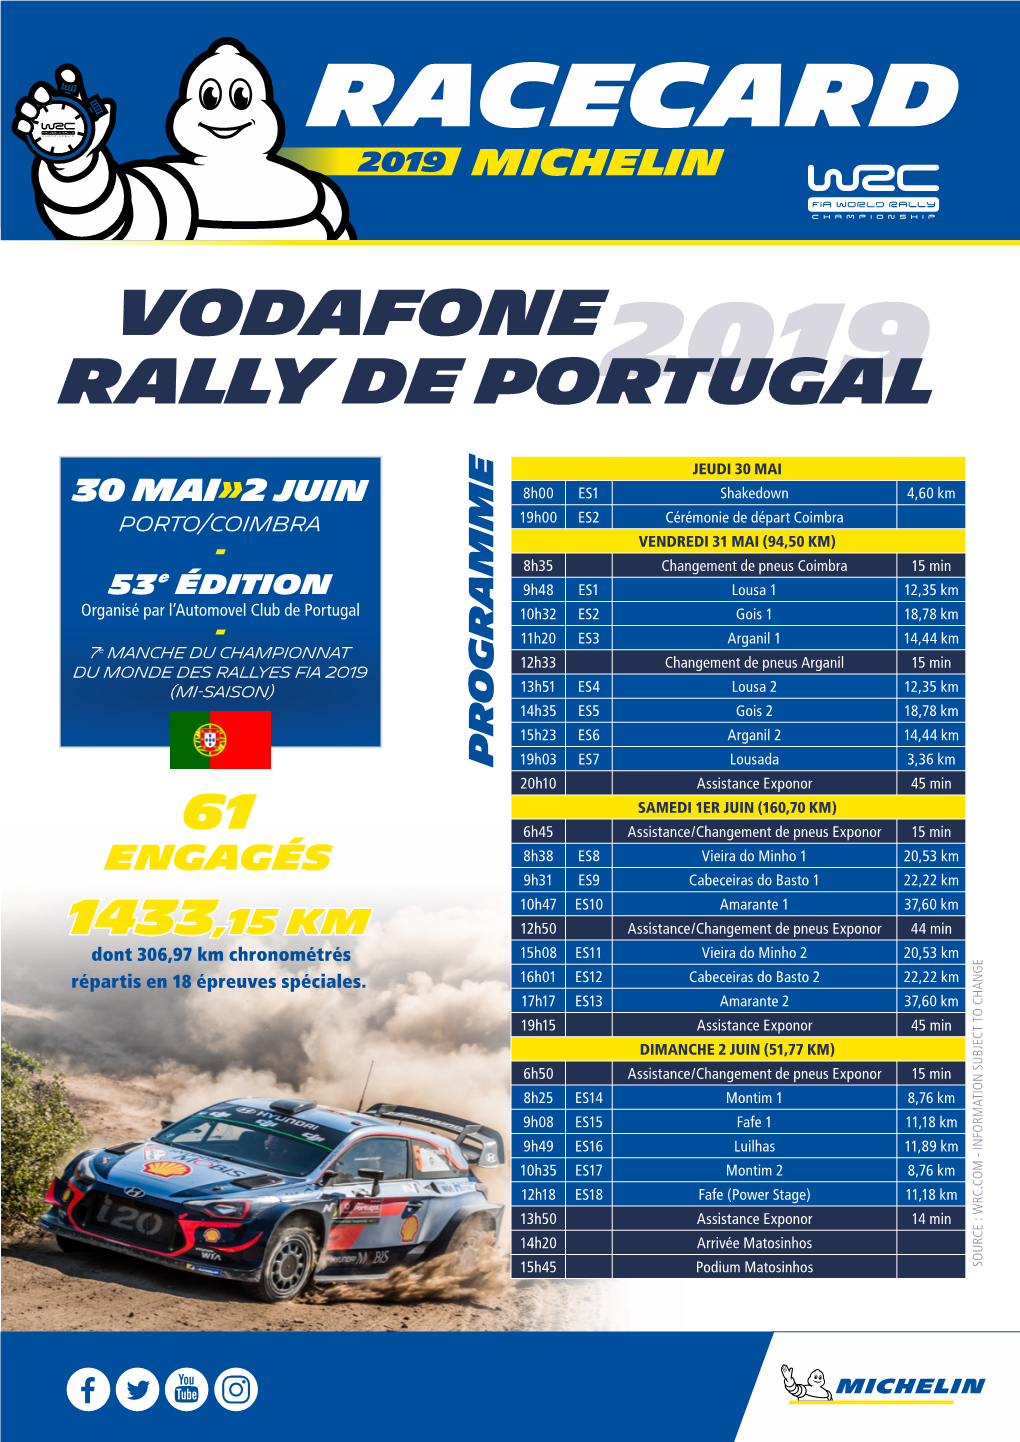 Vodafone Rally De Portugal2019